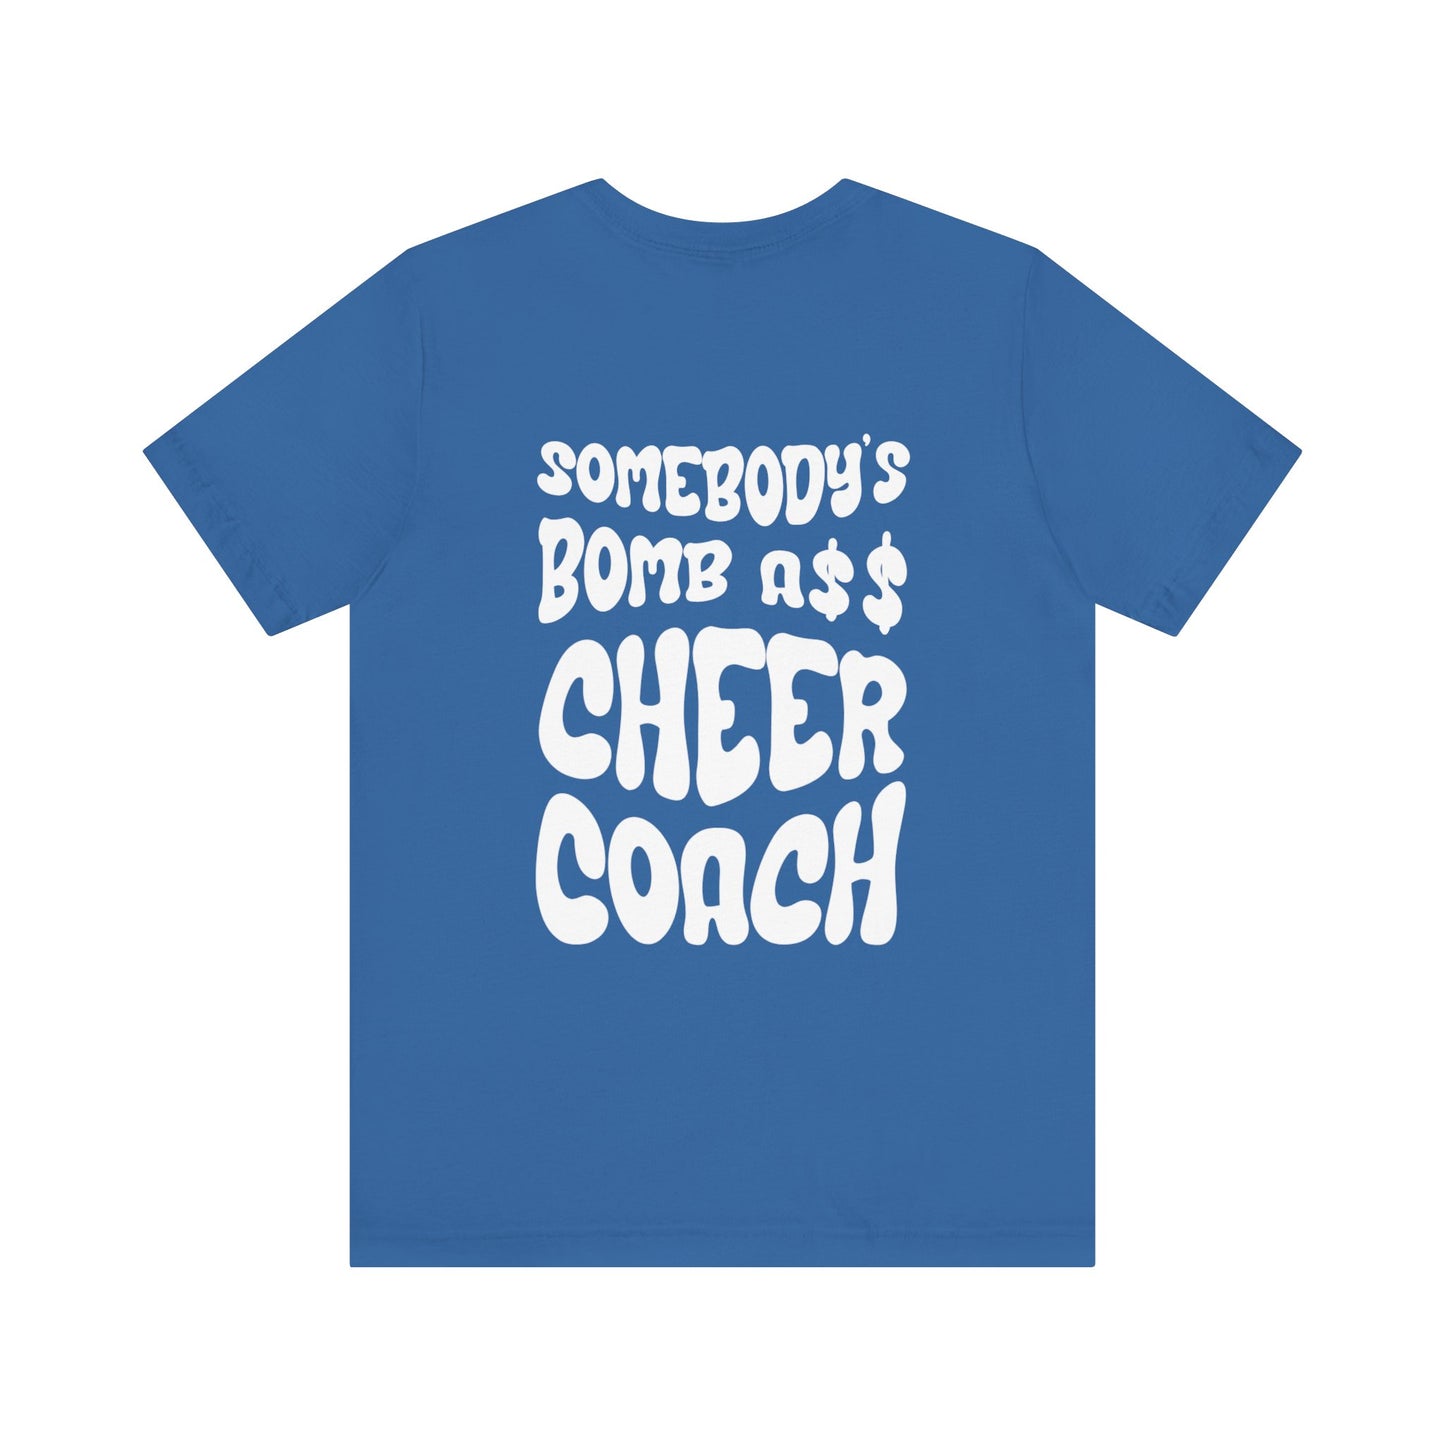 Bomb A$$ Cheer Coach Tee